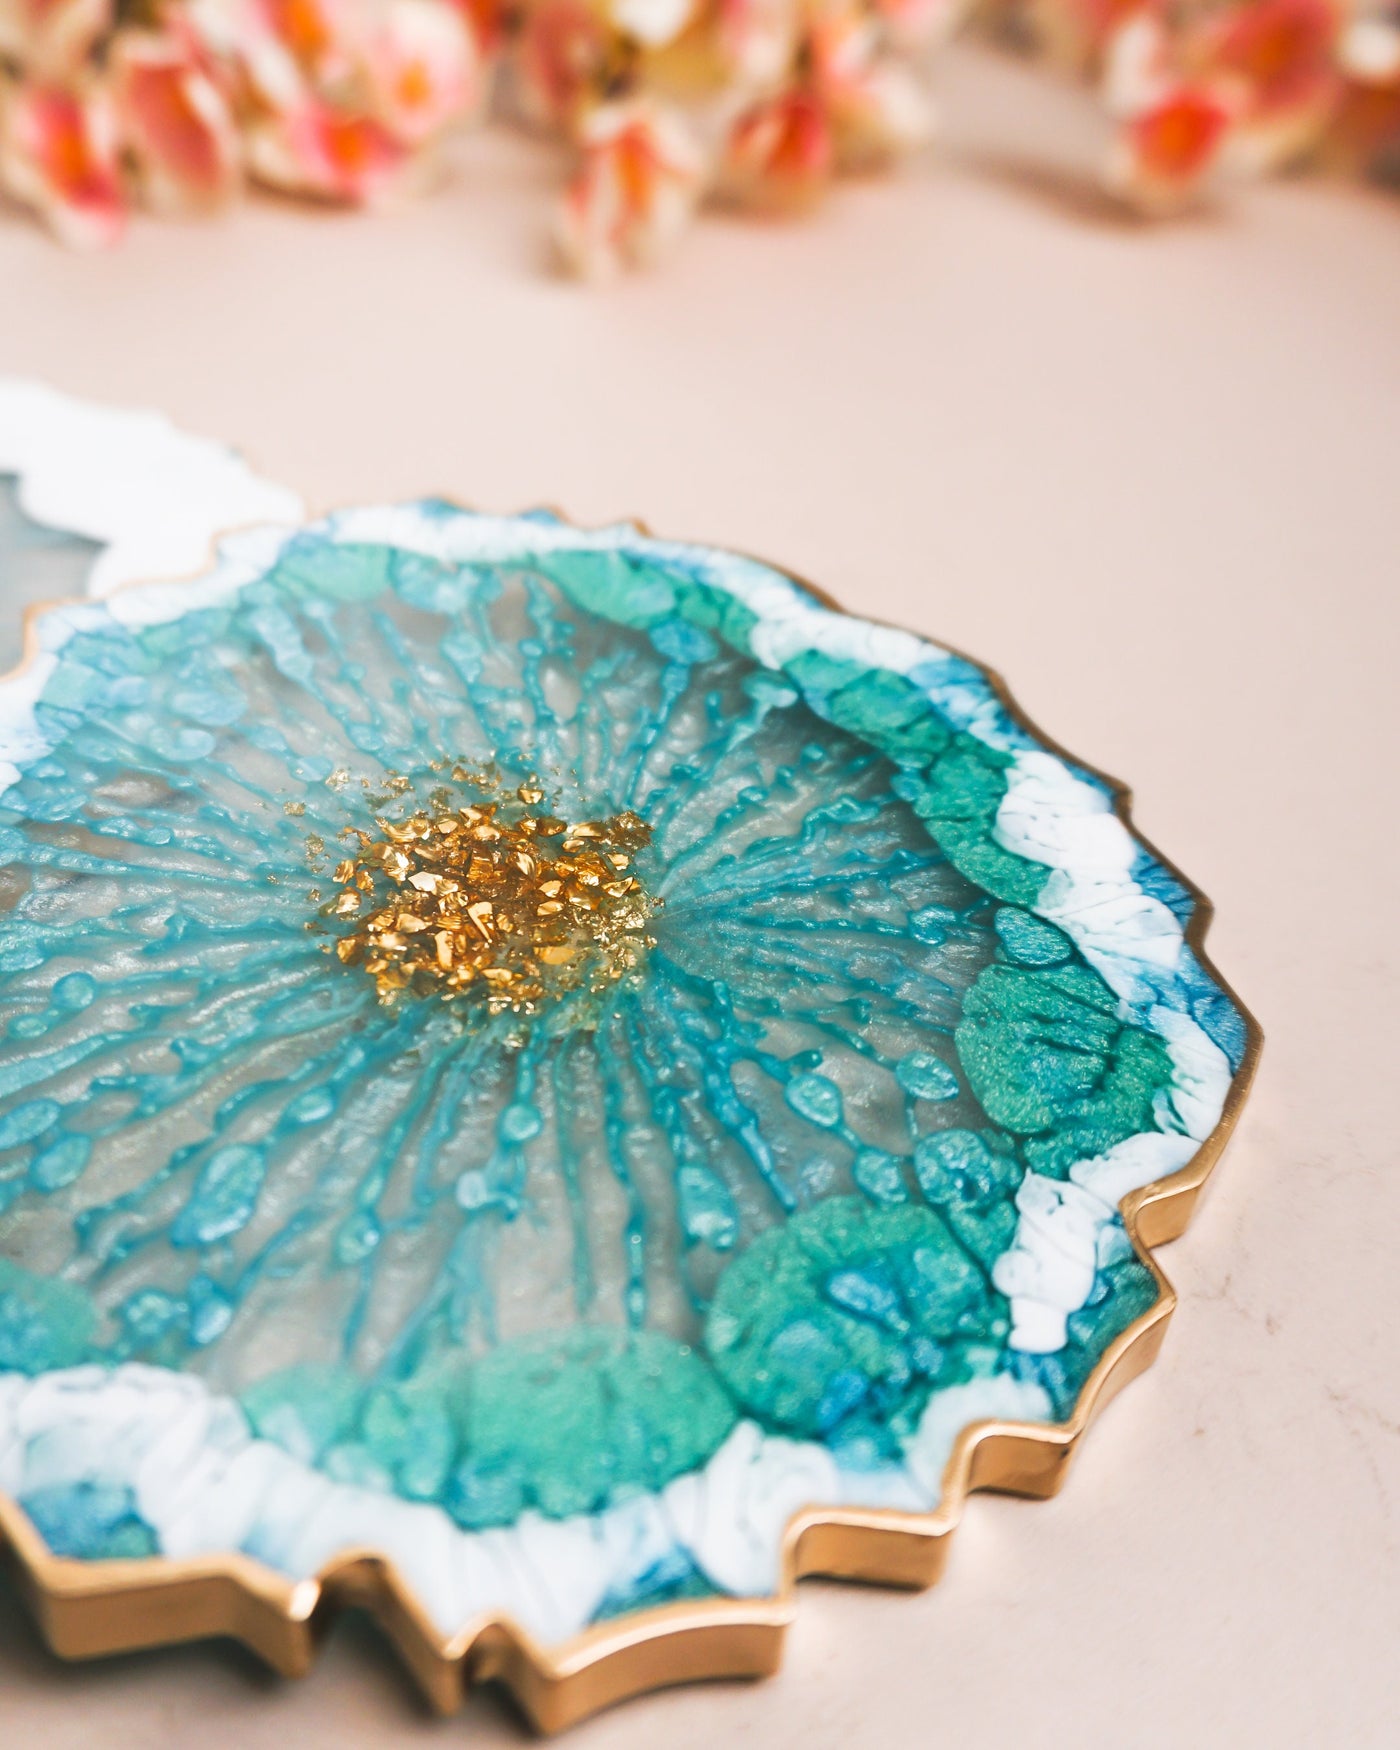 Turquoise, White & Gold Coaster Set 2 / Handmade Resin Agate Slice / Double